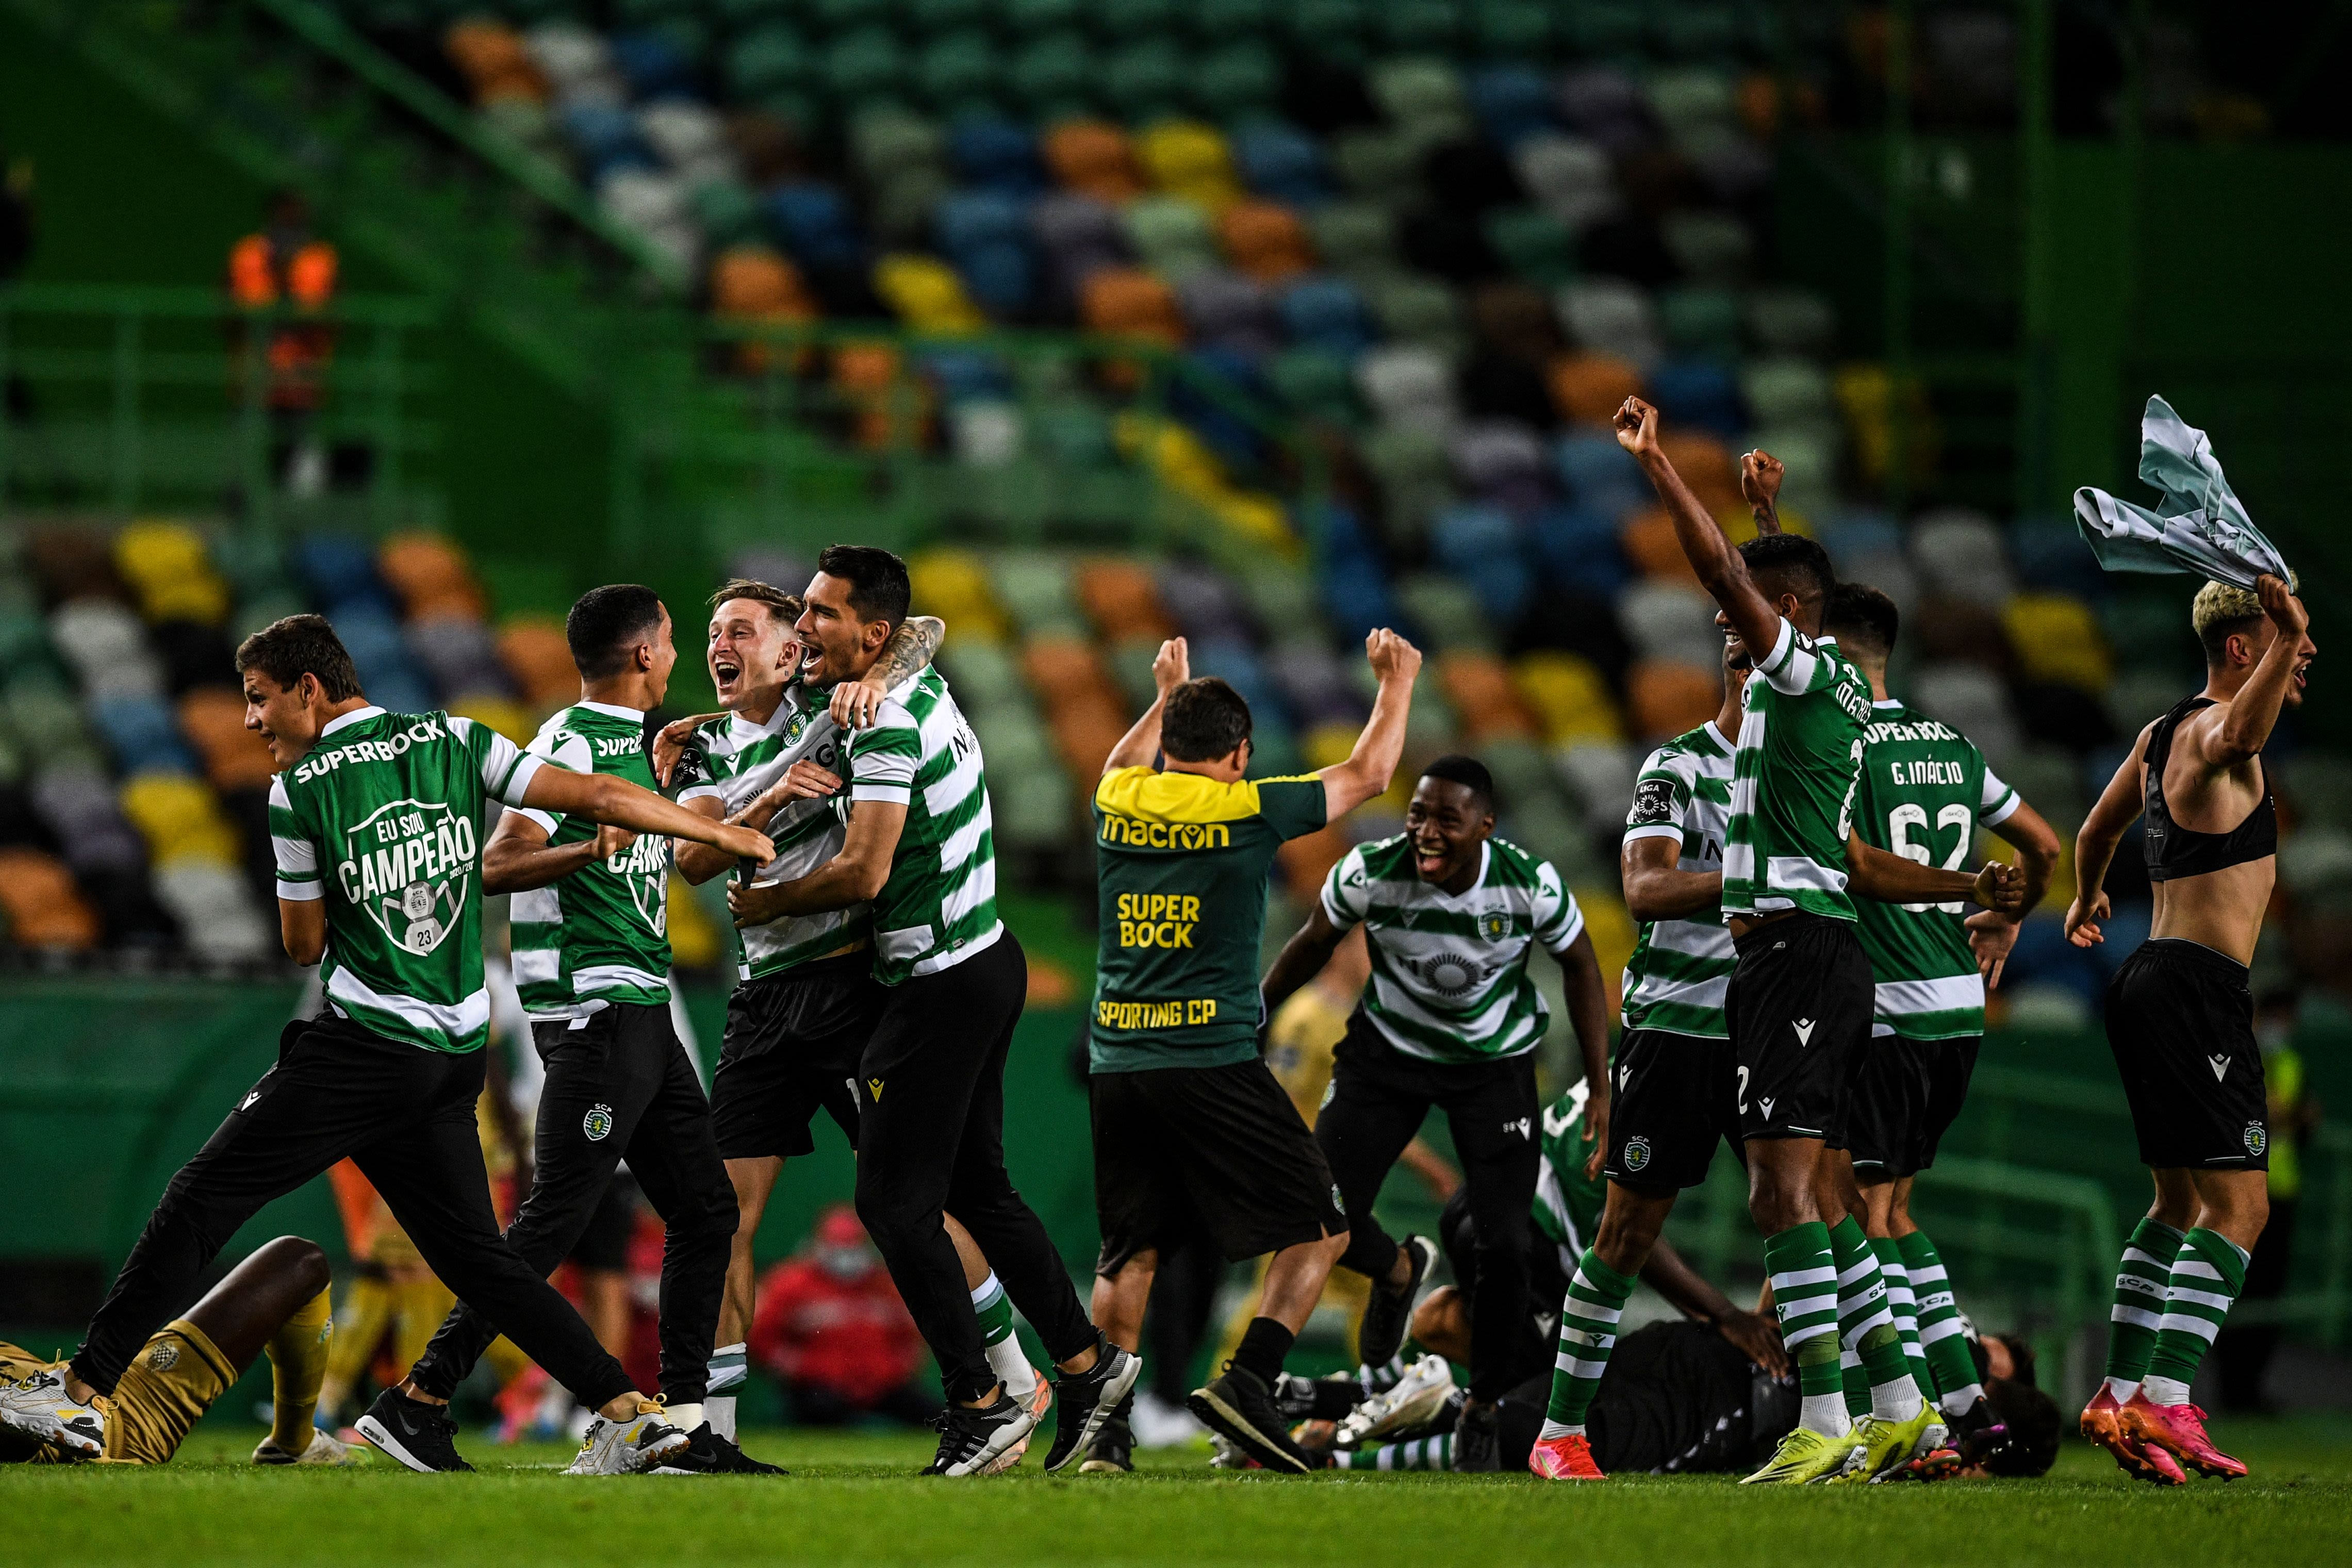 Sporting Lisbon's bittersweet title win after 19 years of hurt | CNN